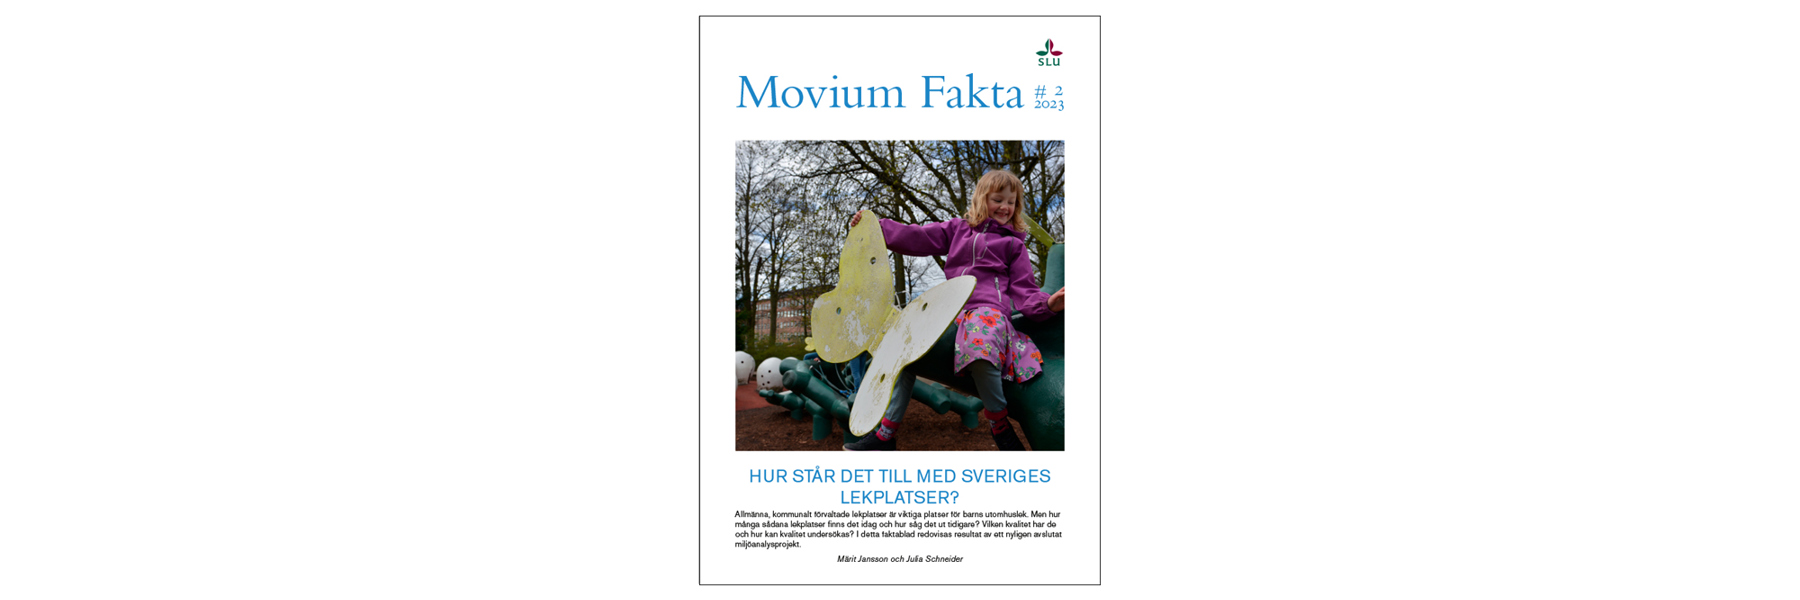 Faktabladets omslag. Barn på lekredskap. Foto.